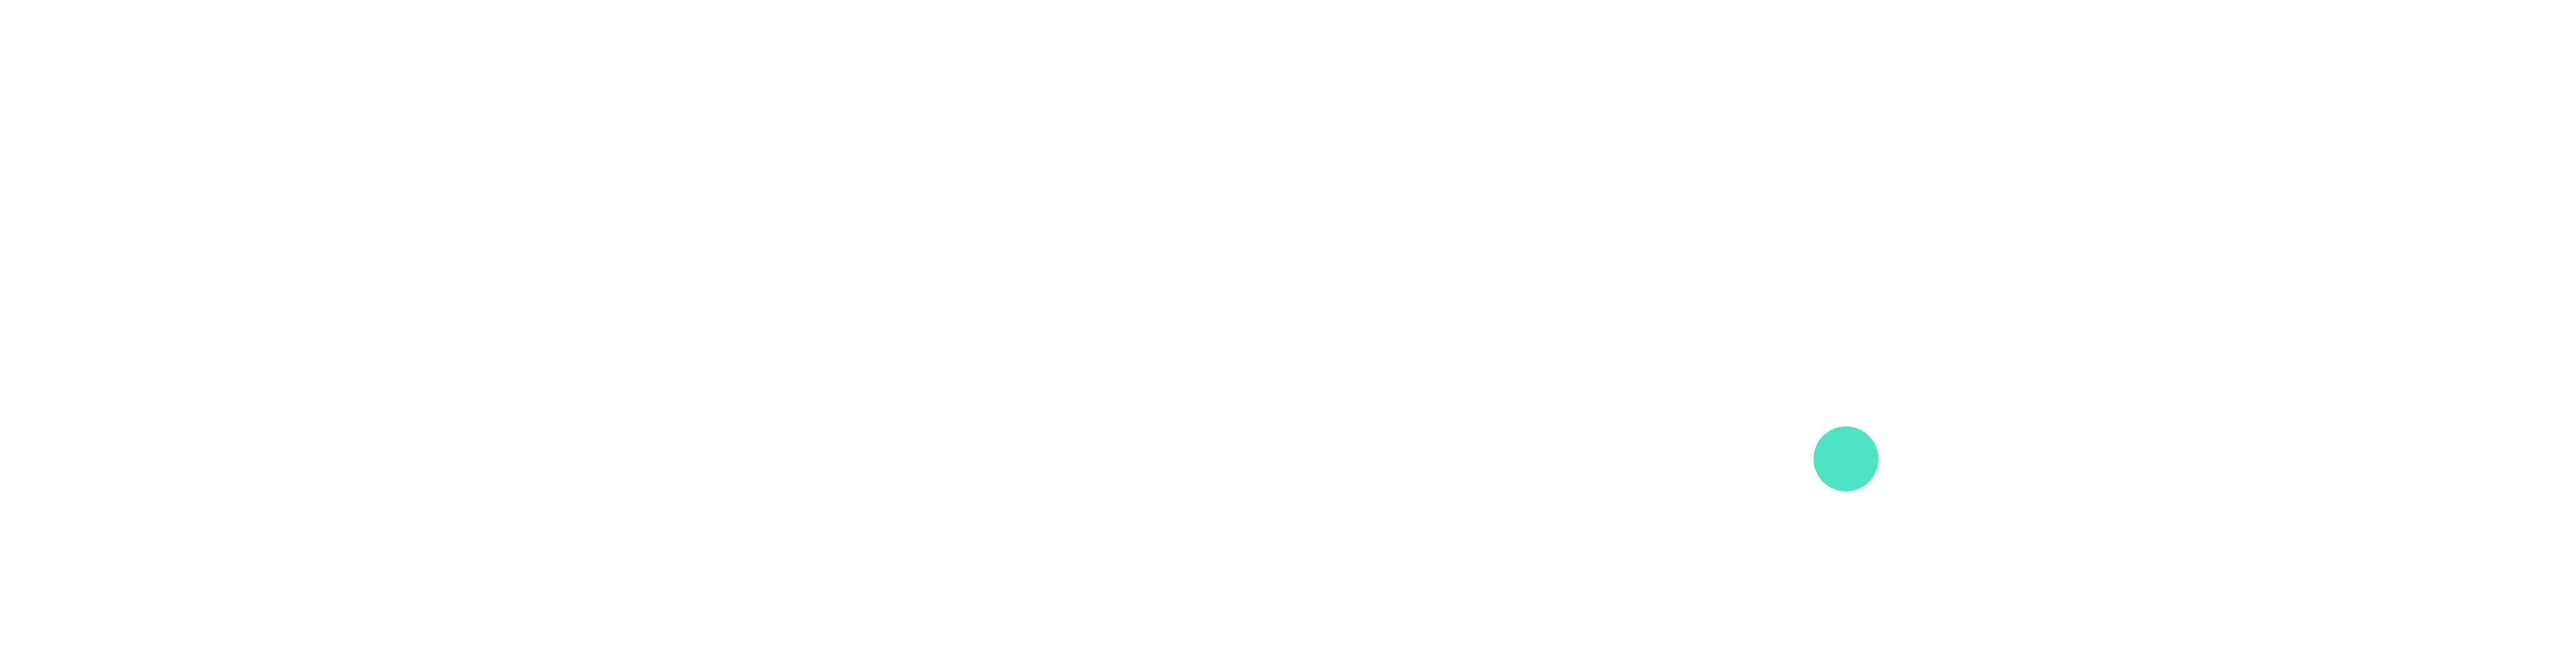 Cognizone logo